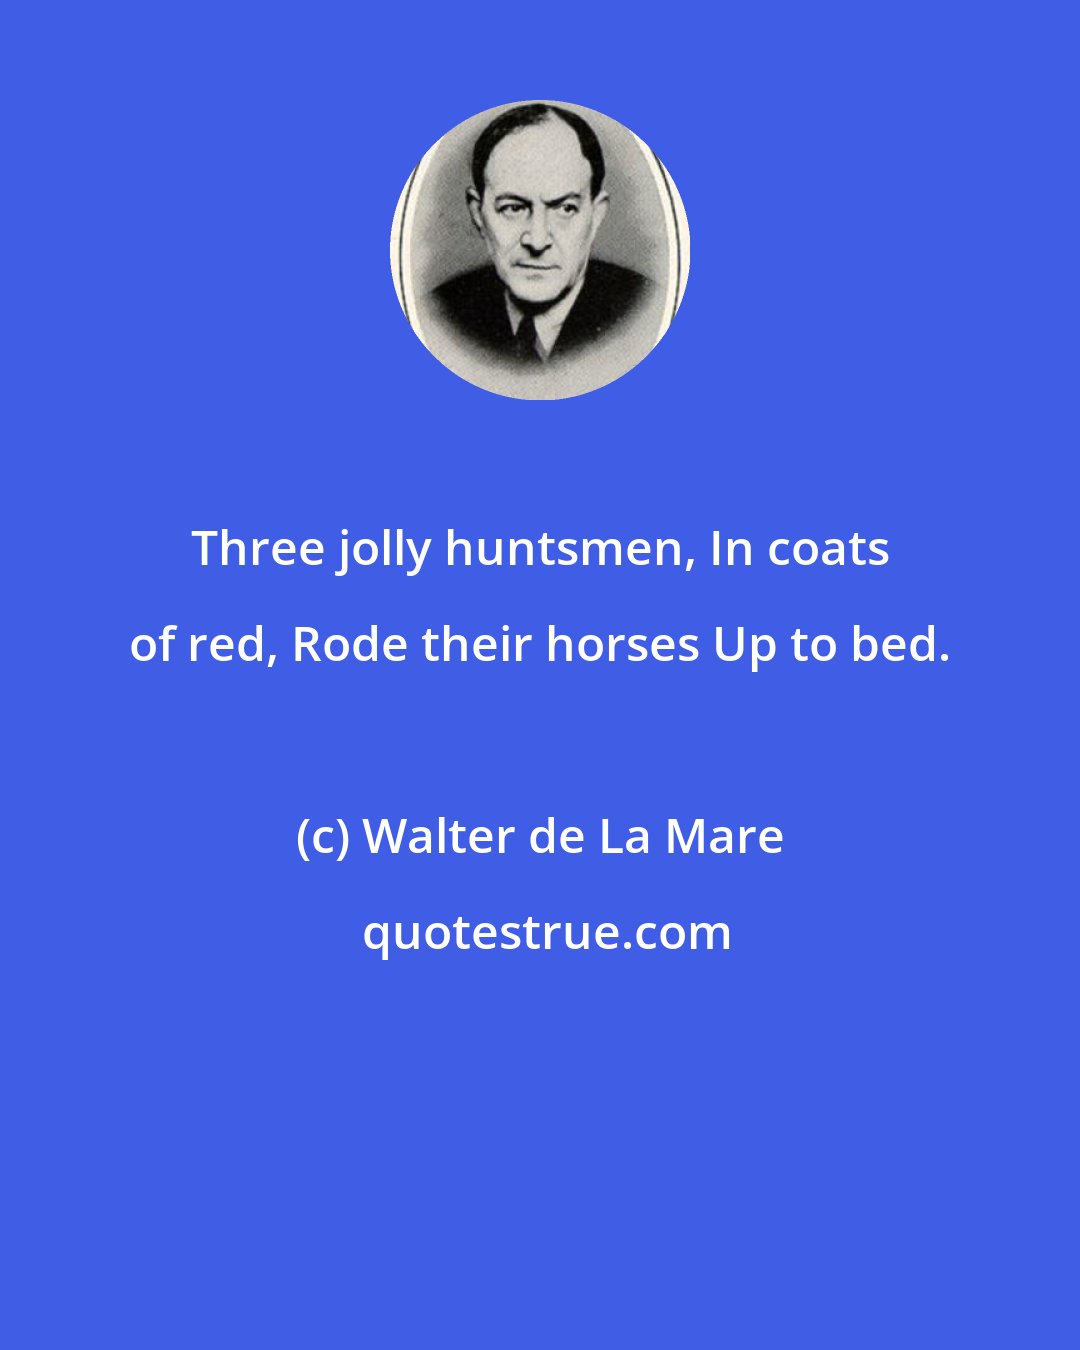 Walter de La Mare: Three jolly huntsmen, In coats of red, Rode their horses Up to bed.